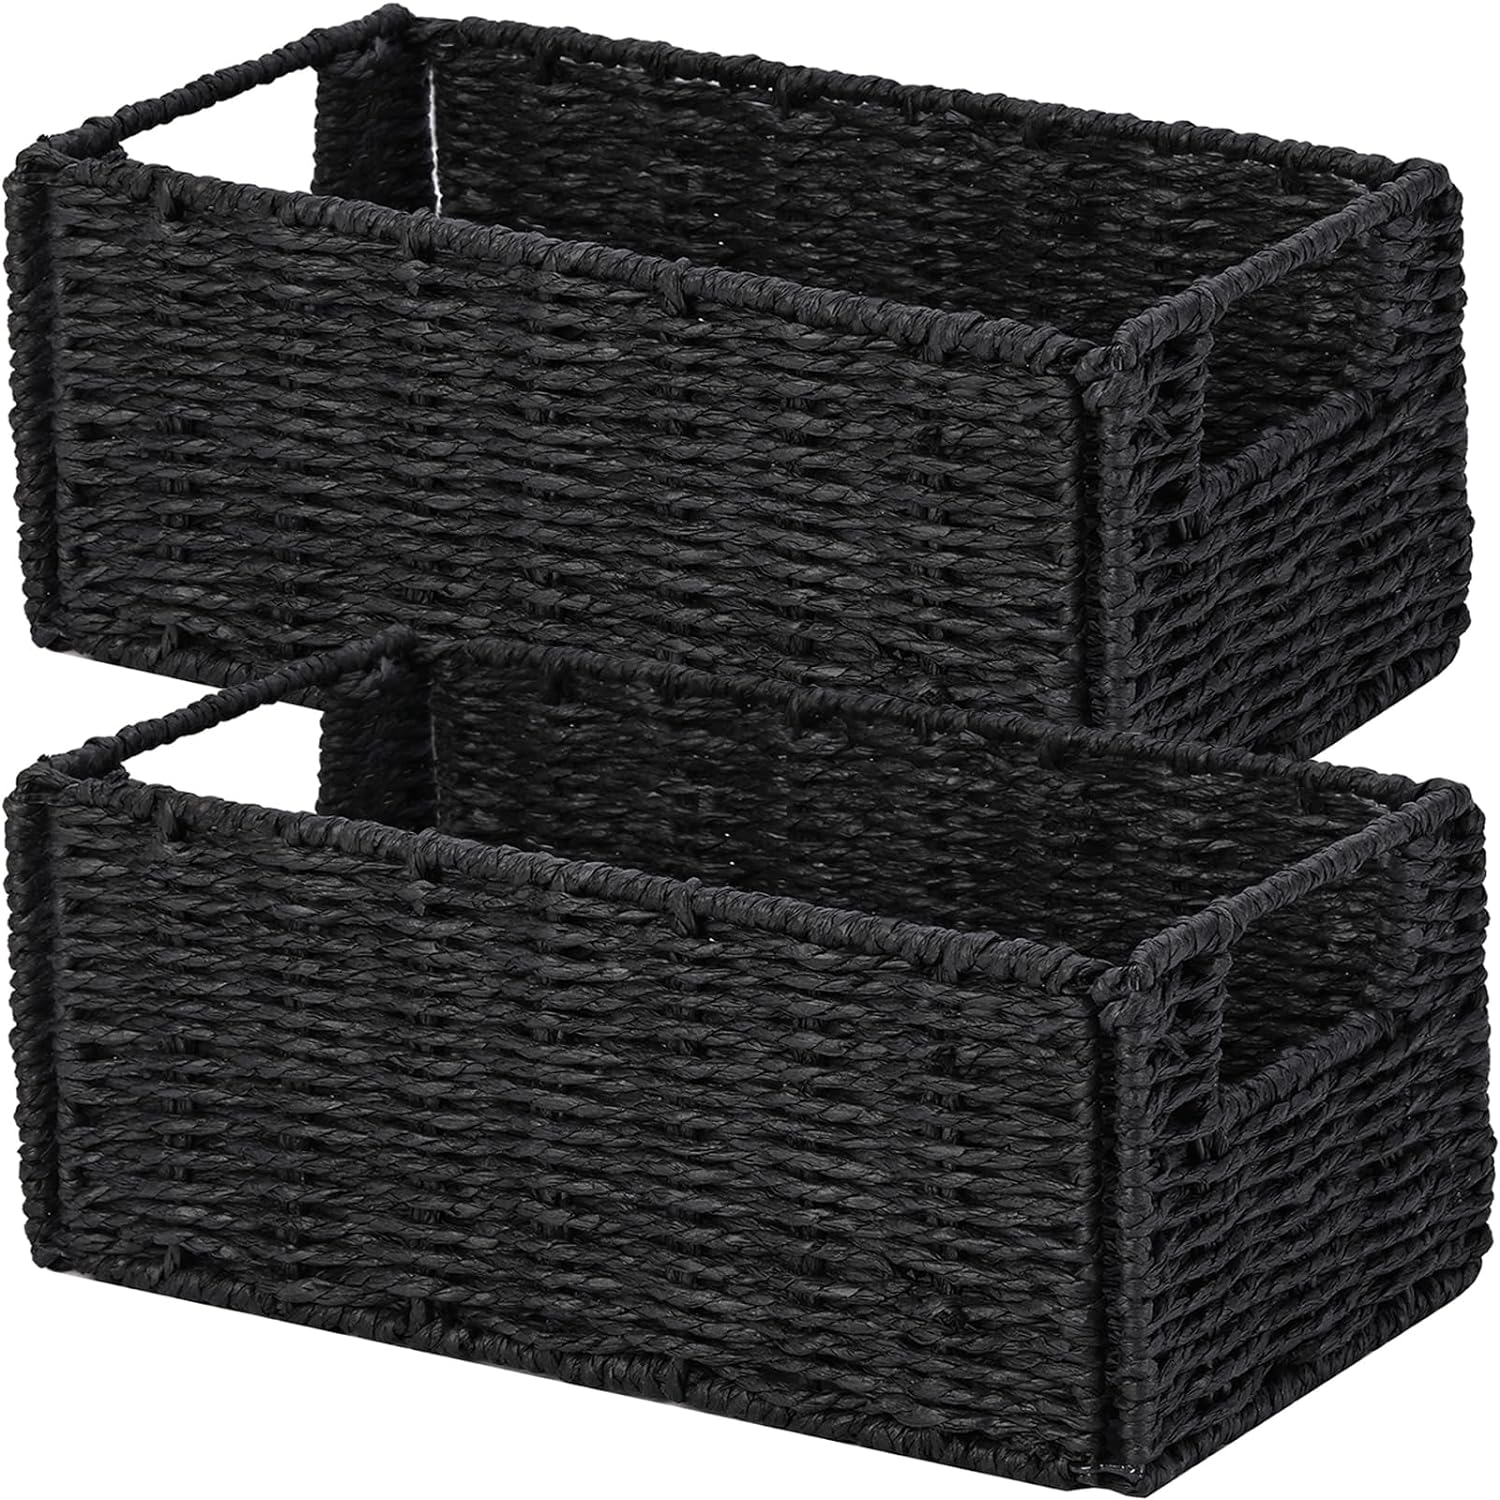 Vagusicc Small Wicker Storage Baskets